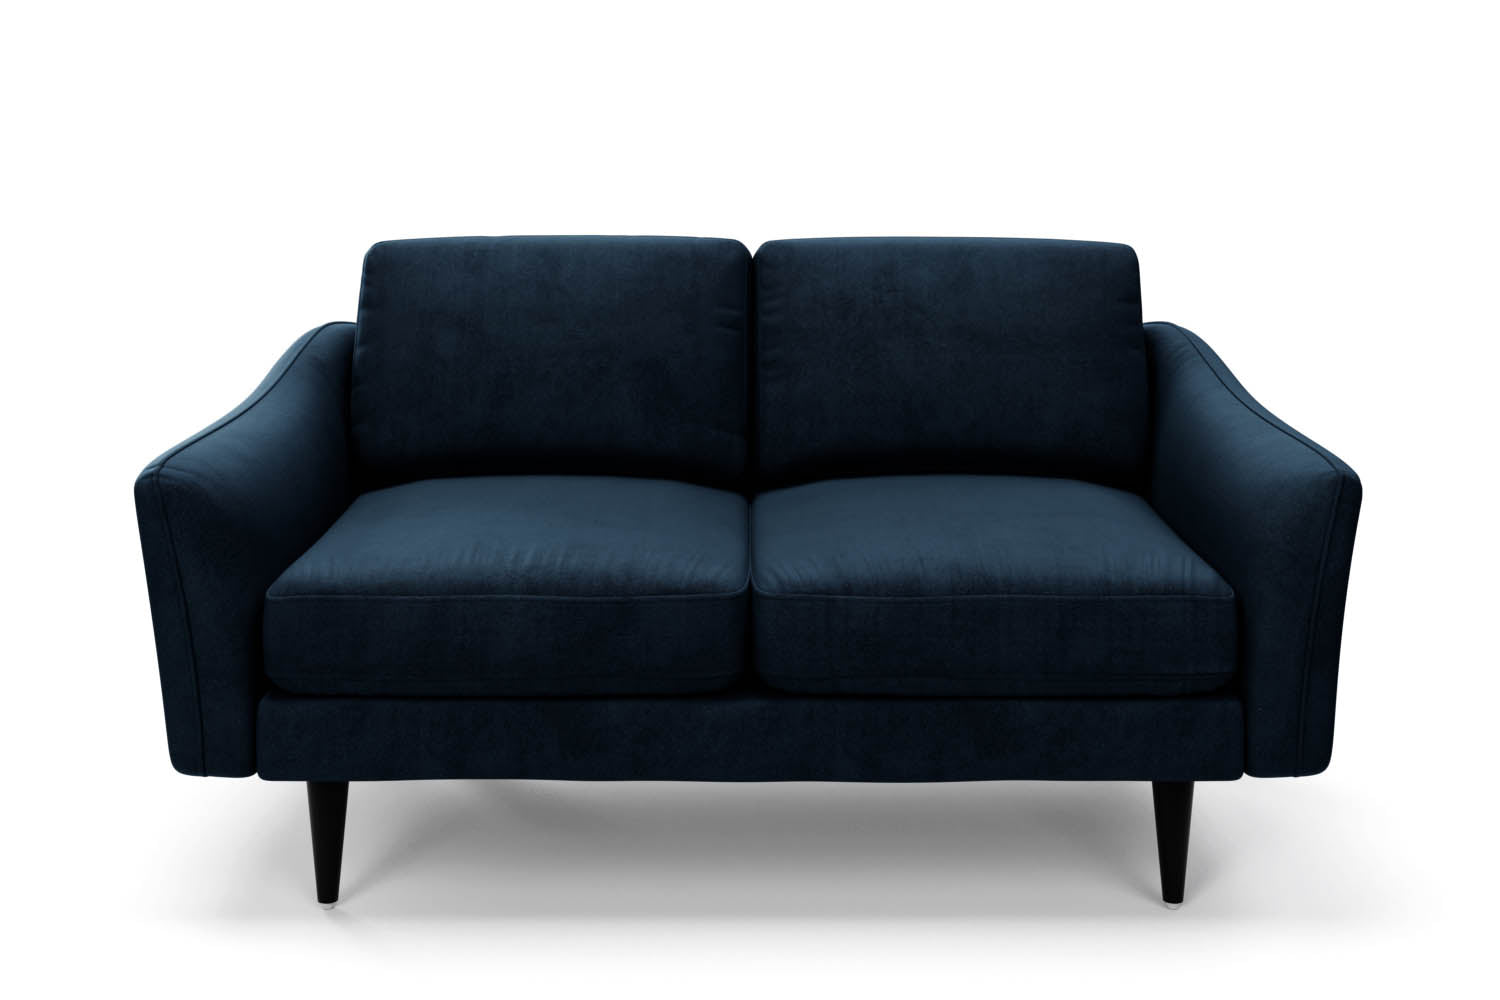 SNUG | The Rebel 2 Seater Sofa in Deep Blue variant_40837173149744